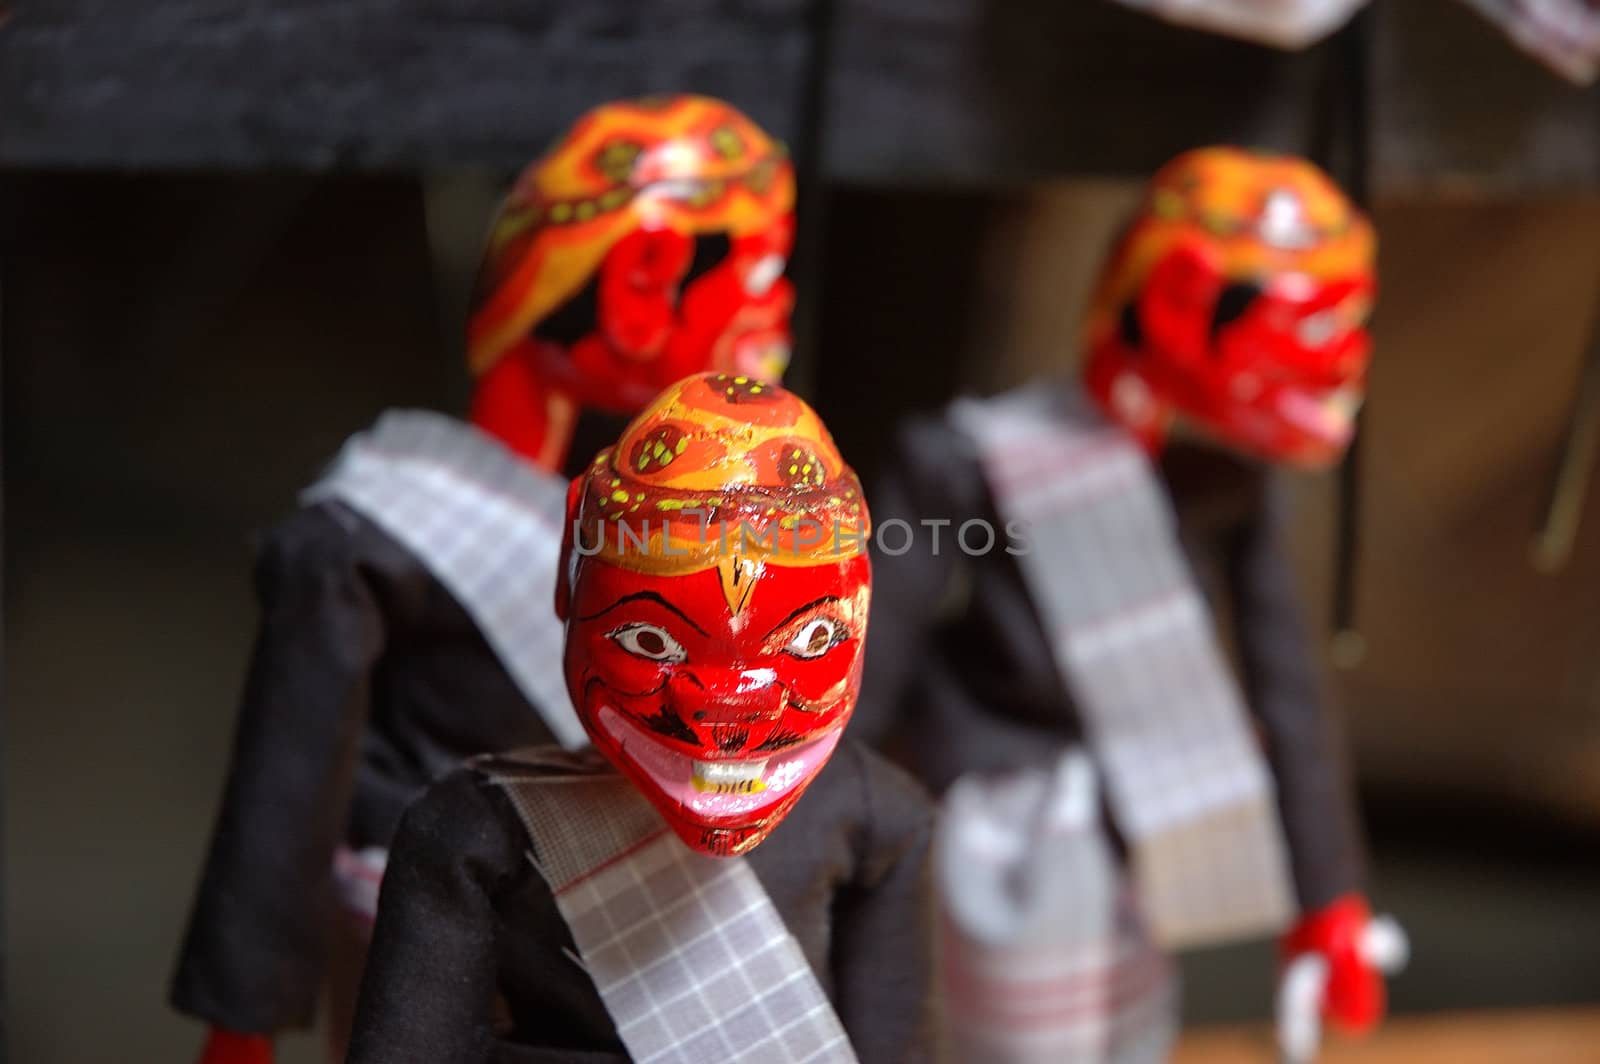 wayang golek is sundanese traditional art puppet